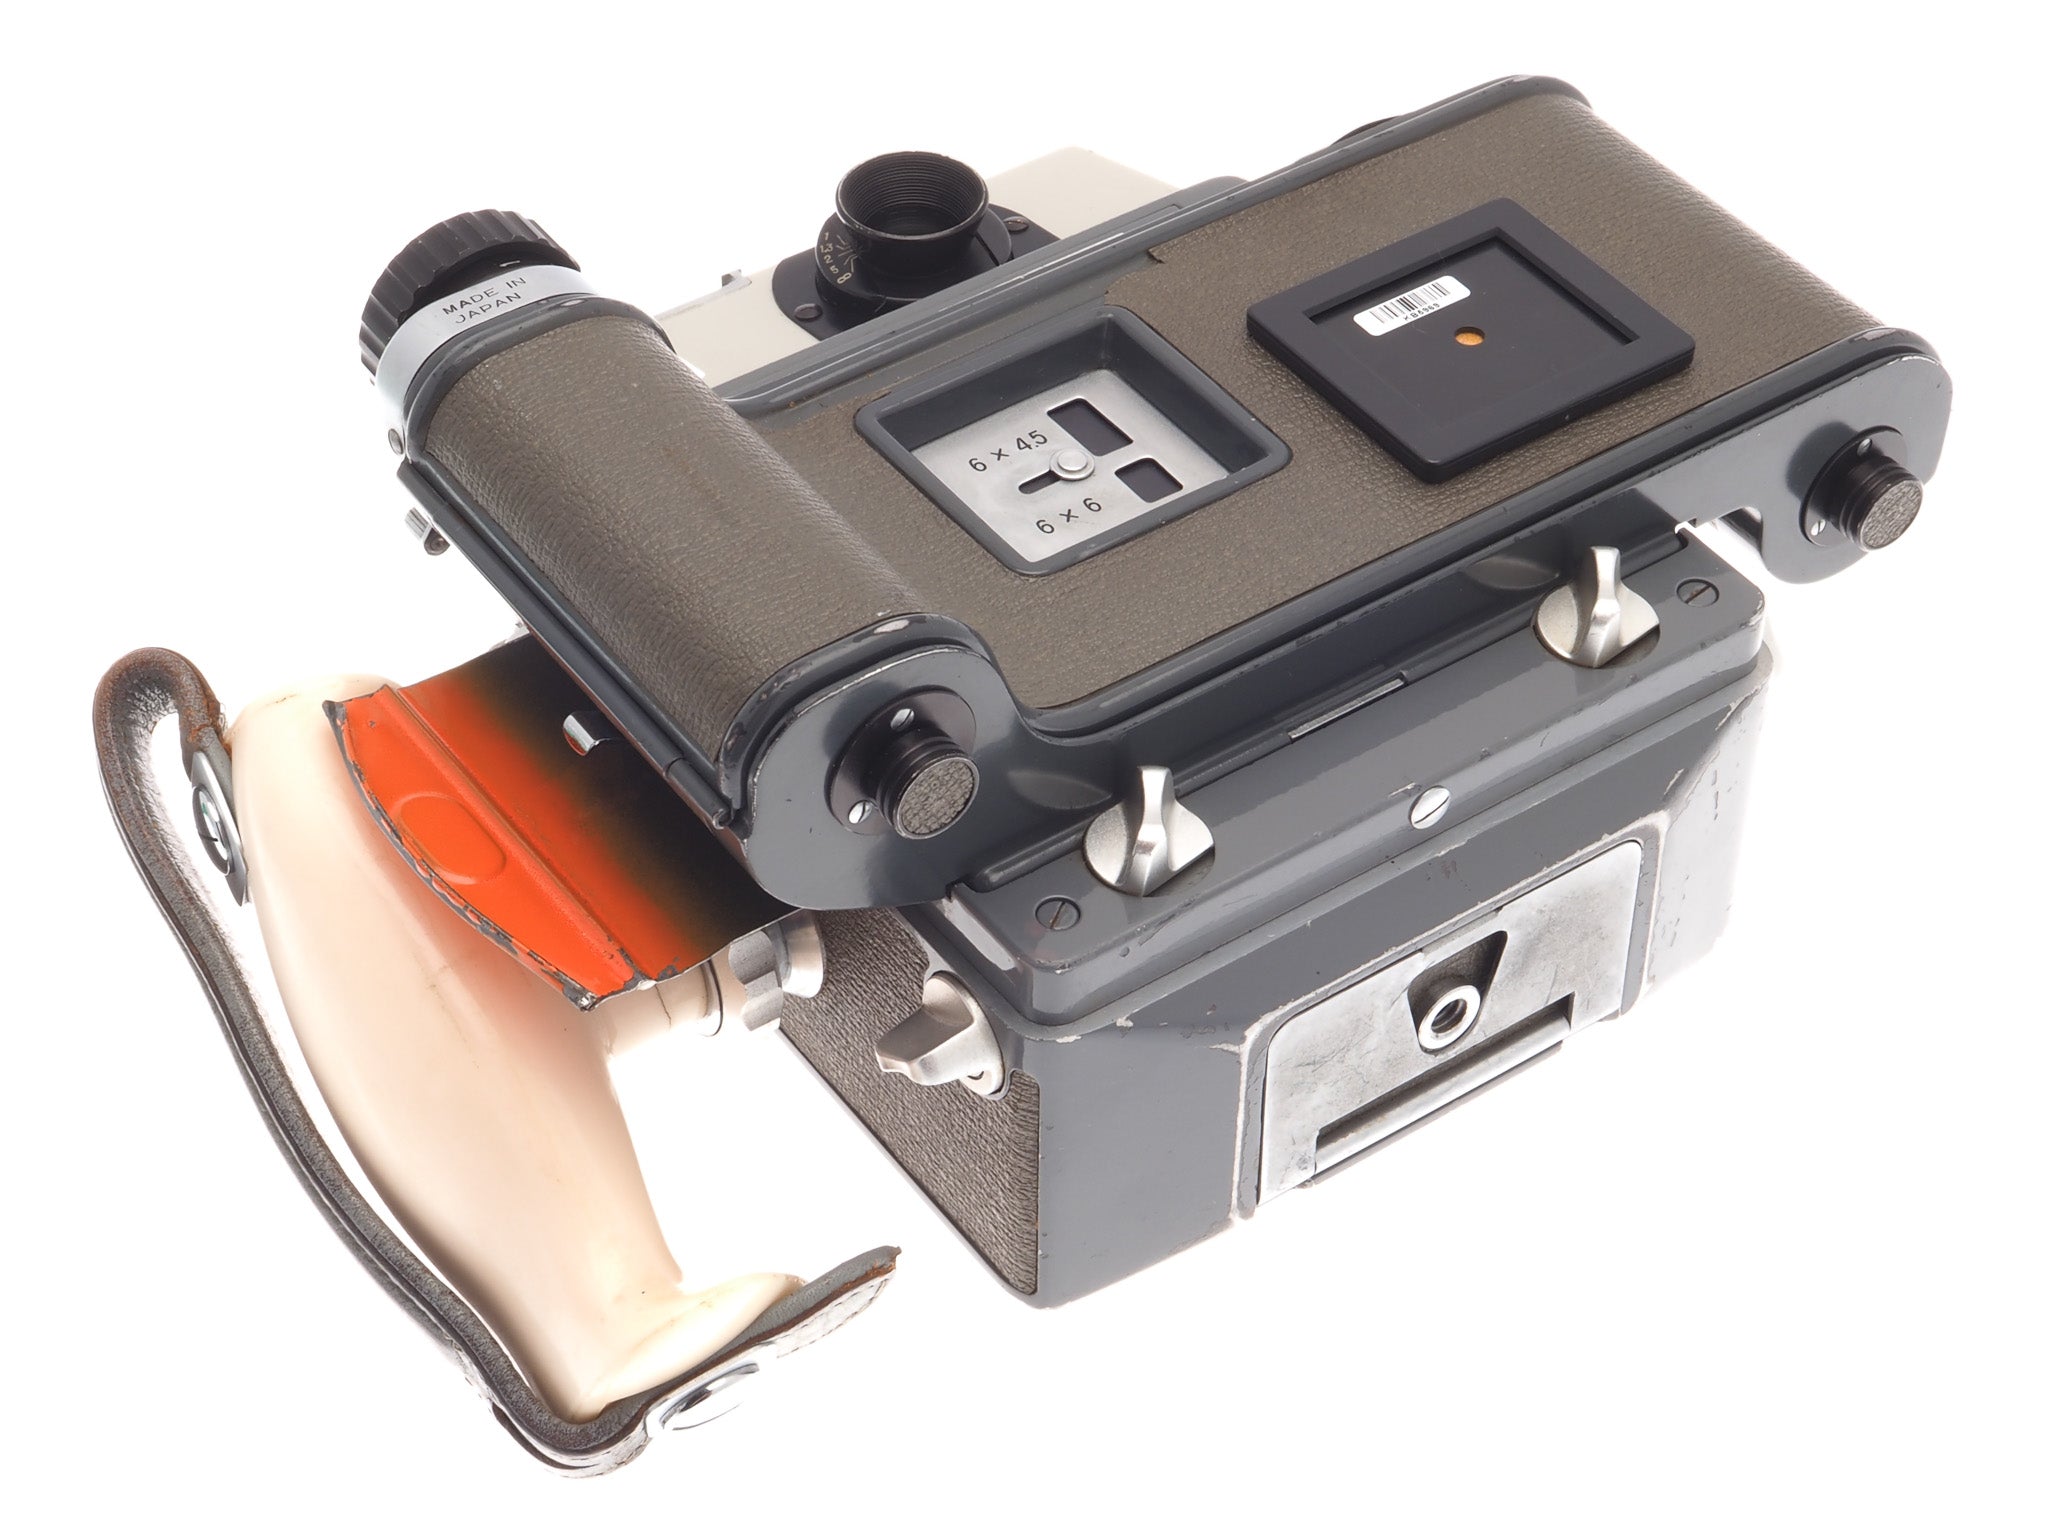 Mamiya Press + 6x9 Roll Film Adapter + 90mm f3.5 Sekor + Left Hand 